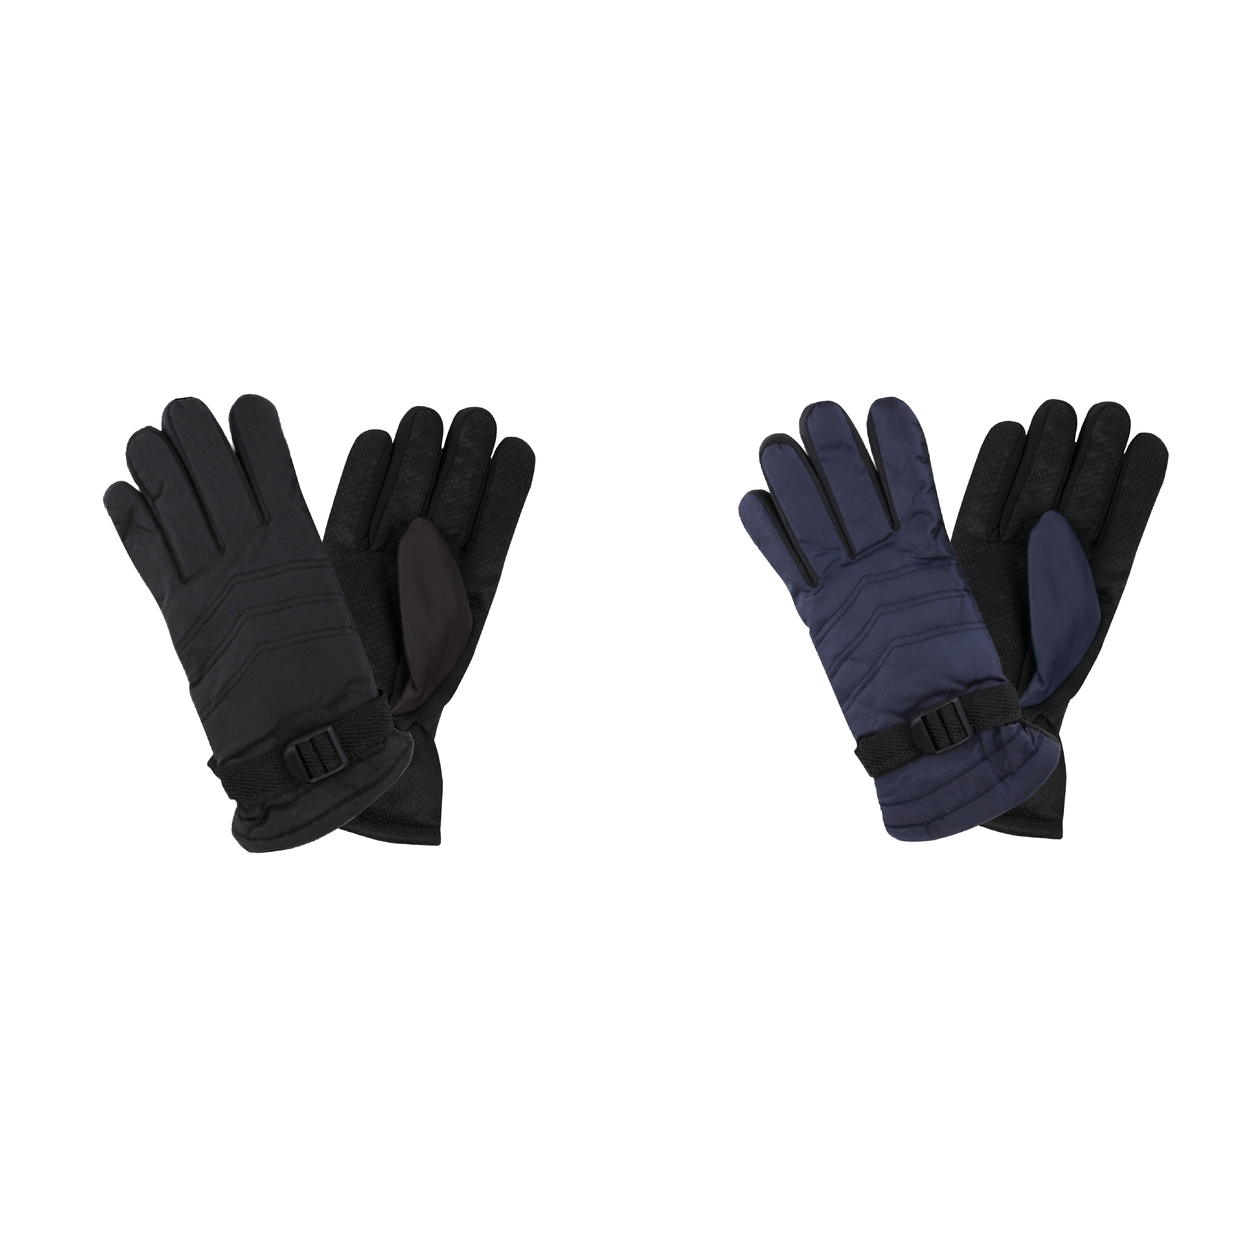 2-Pairs Women's Cozy Fur Lined Snow Ski Warm Winter Gloves - Black/red